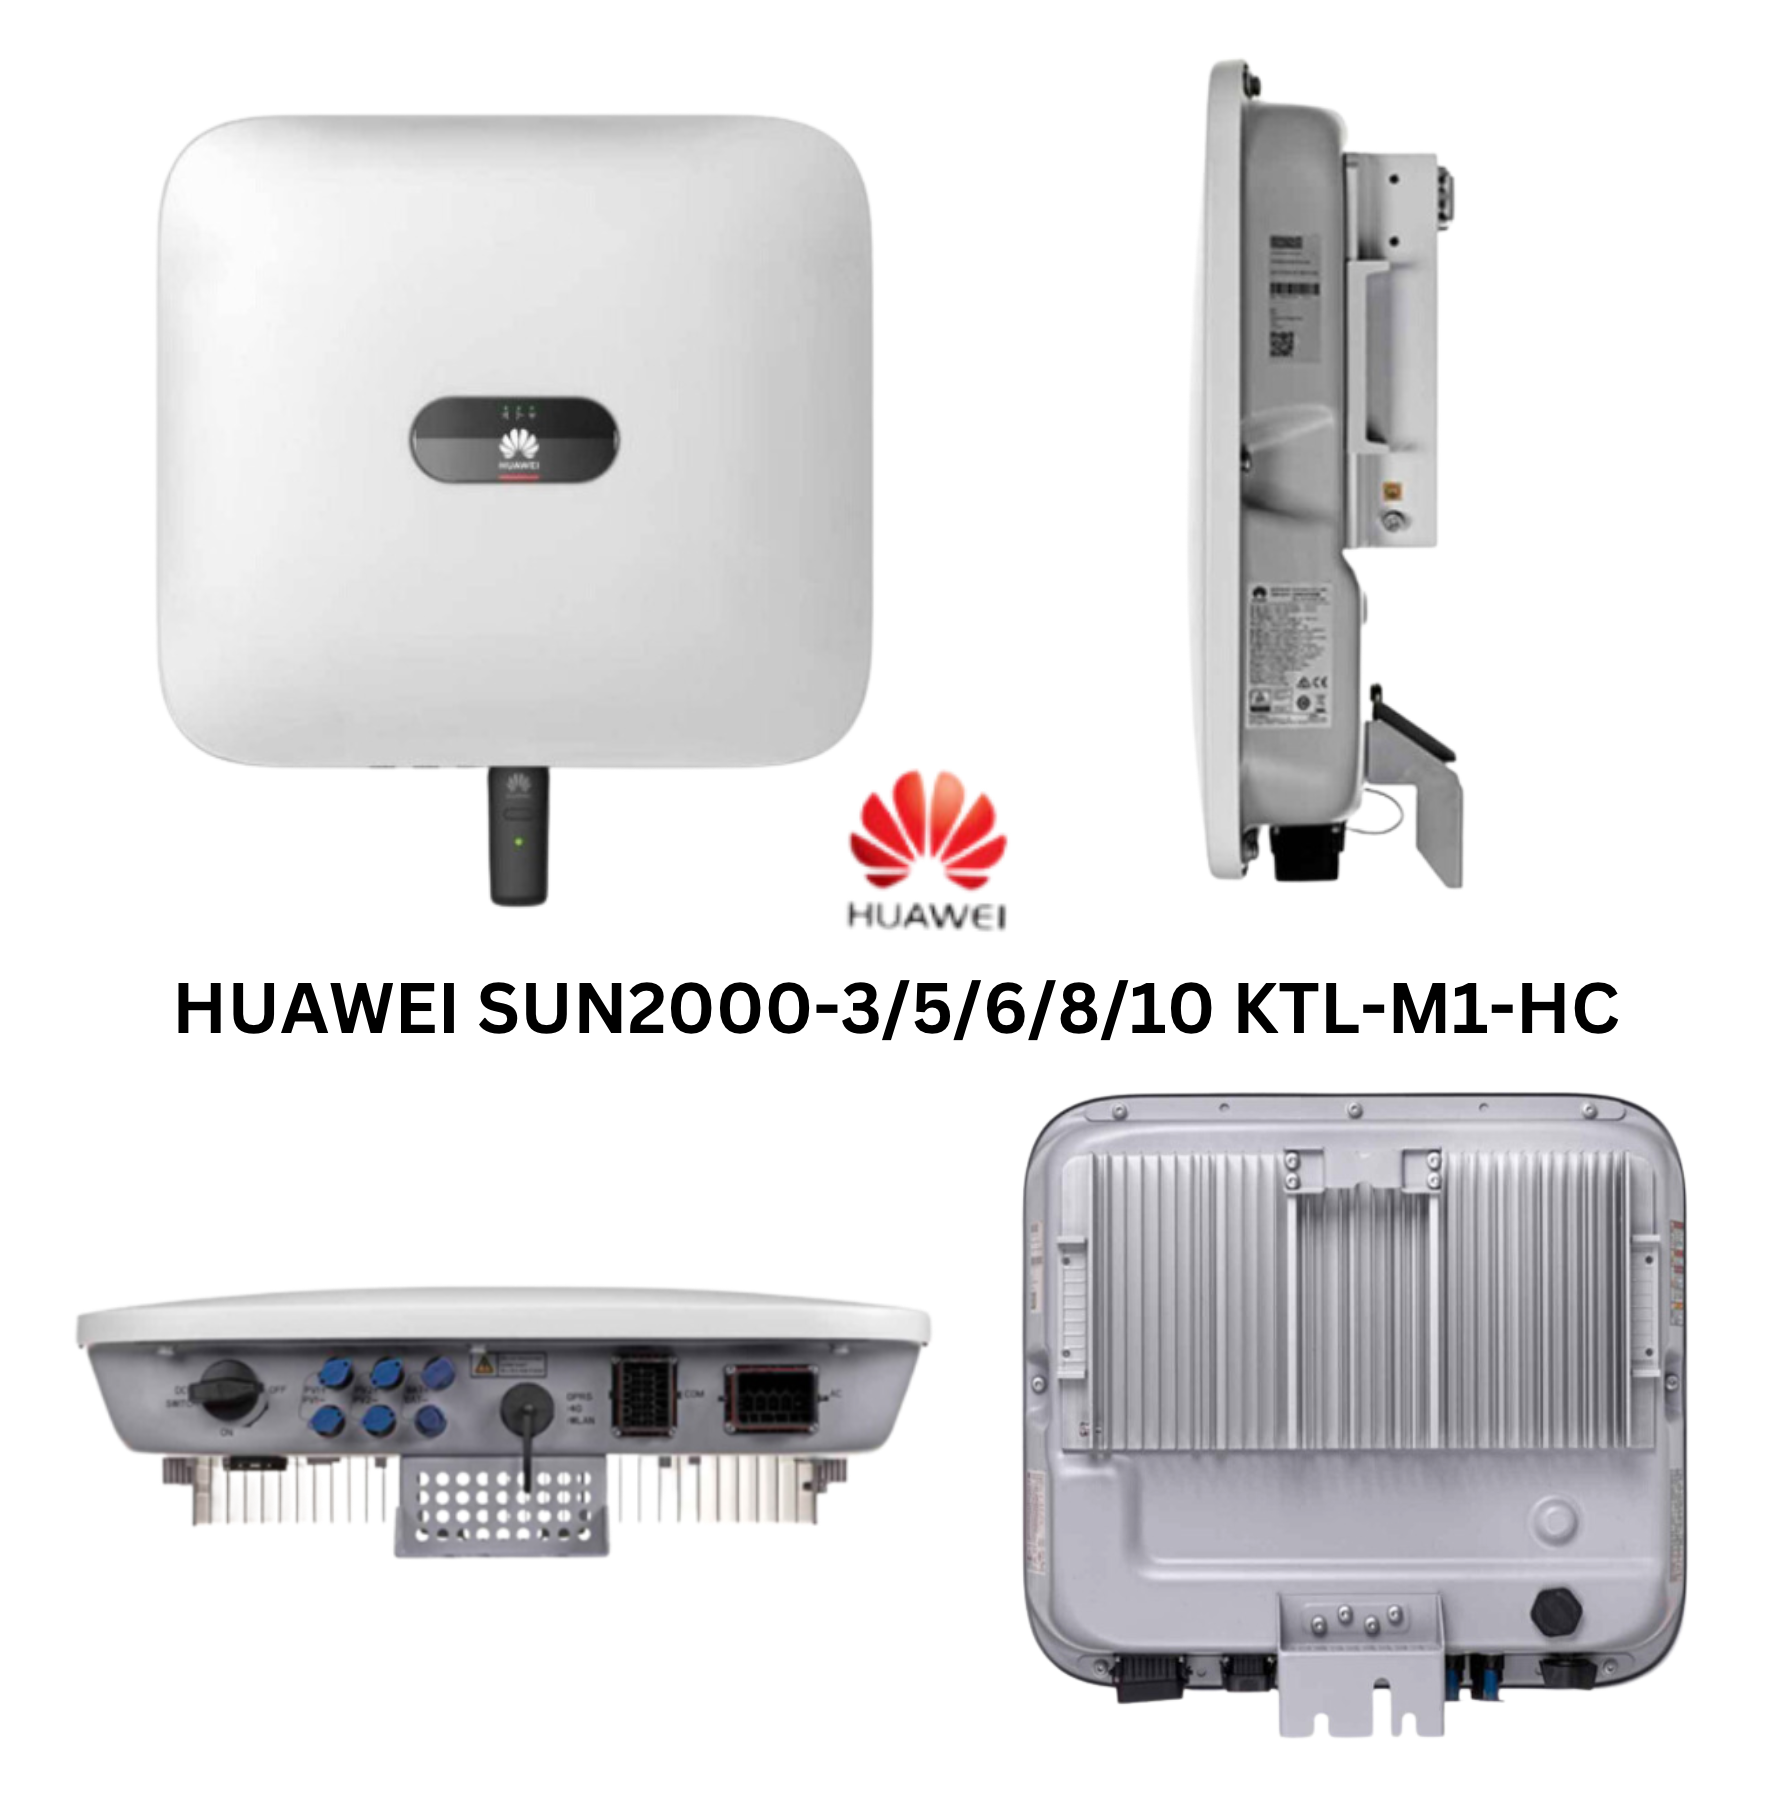 Huawei Komplettes PV-Set - [10kW + 15kWh]